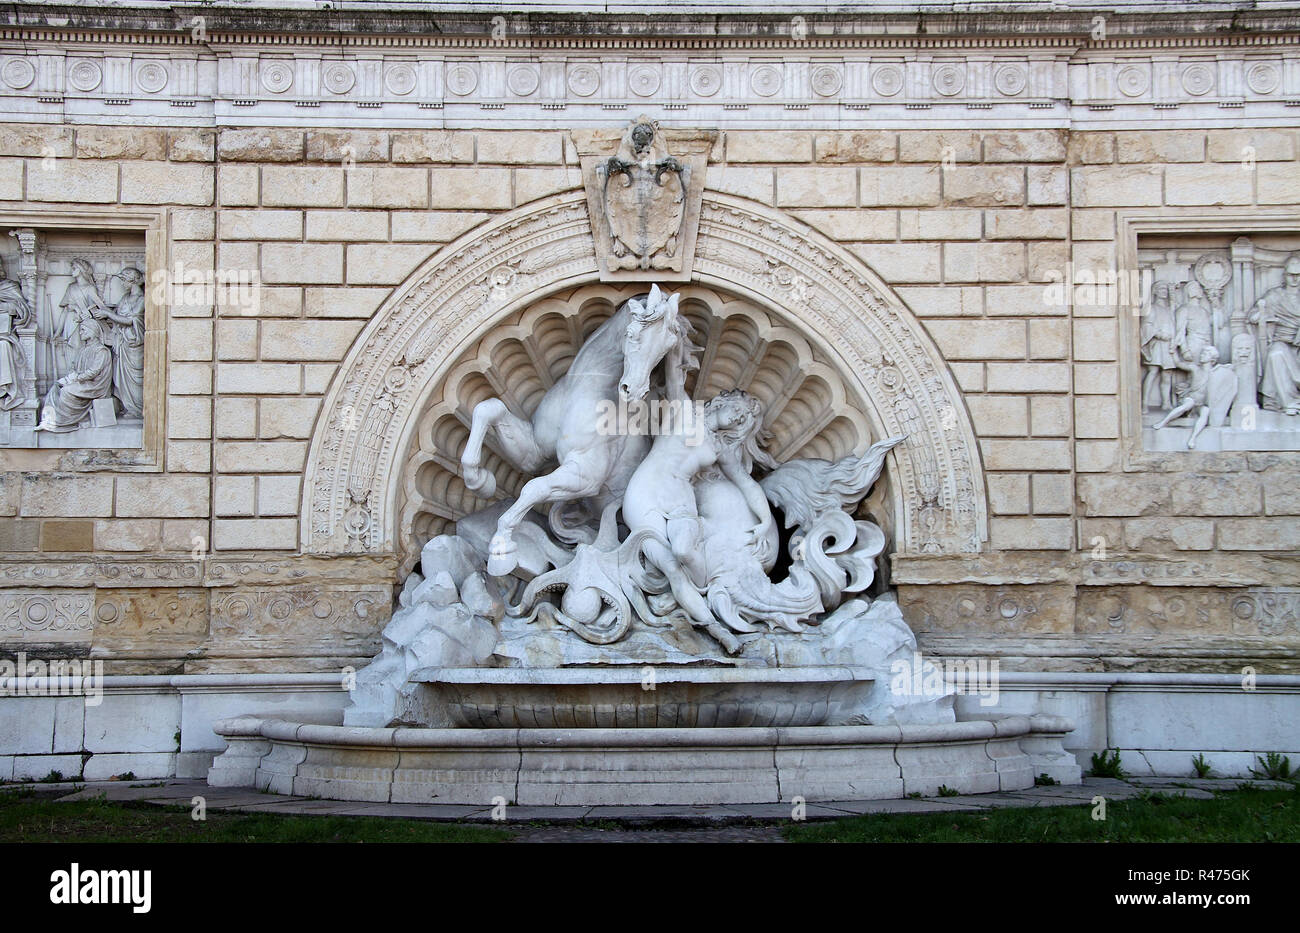 Sculpture at Montagnola City Park Fountain in Bologna Stock Photo - Alamy